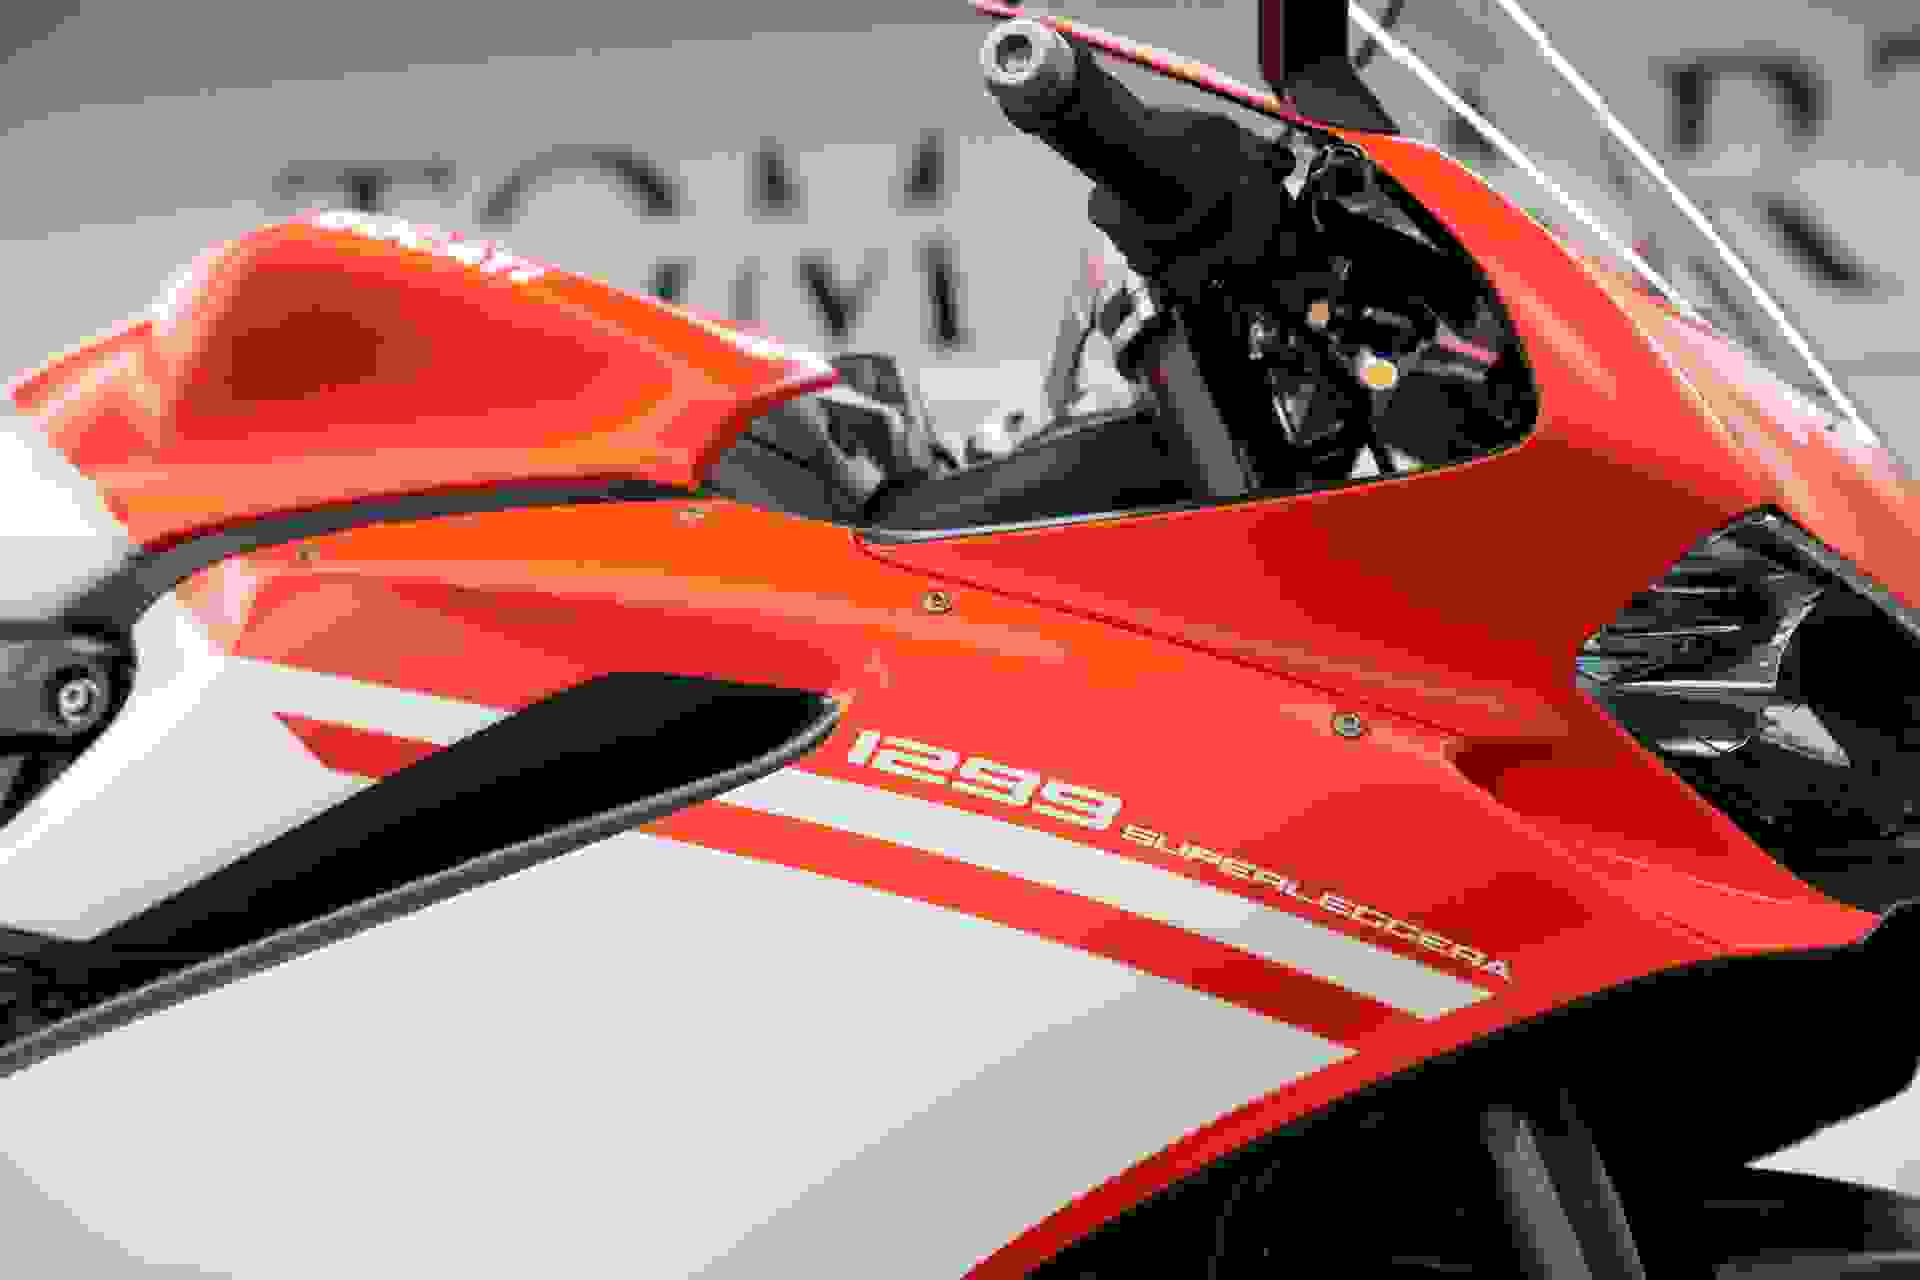 Ducati Superleggera Photo 5644ab91-322b-4f3a-987a-4b2c577fa0c6.jpg